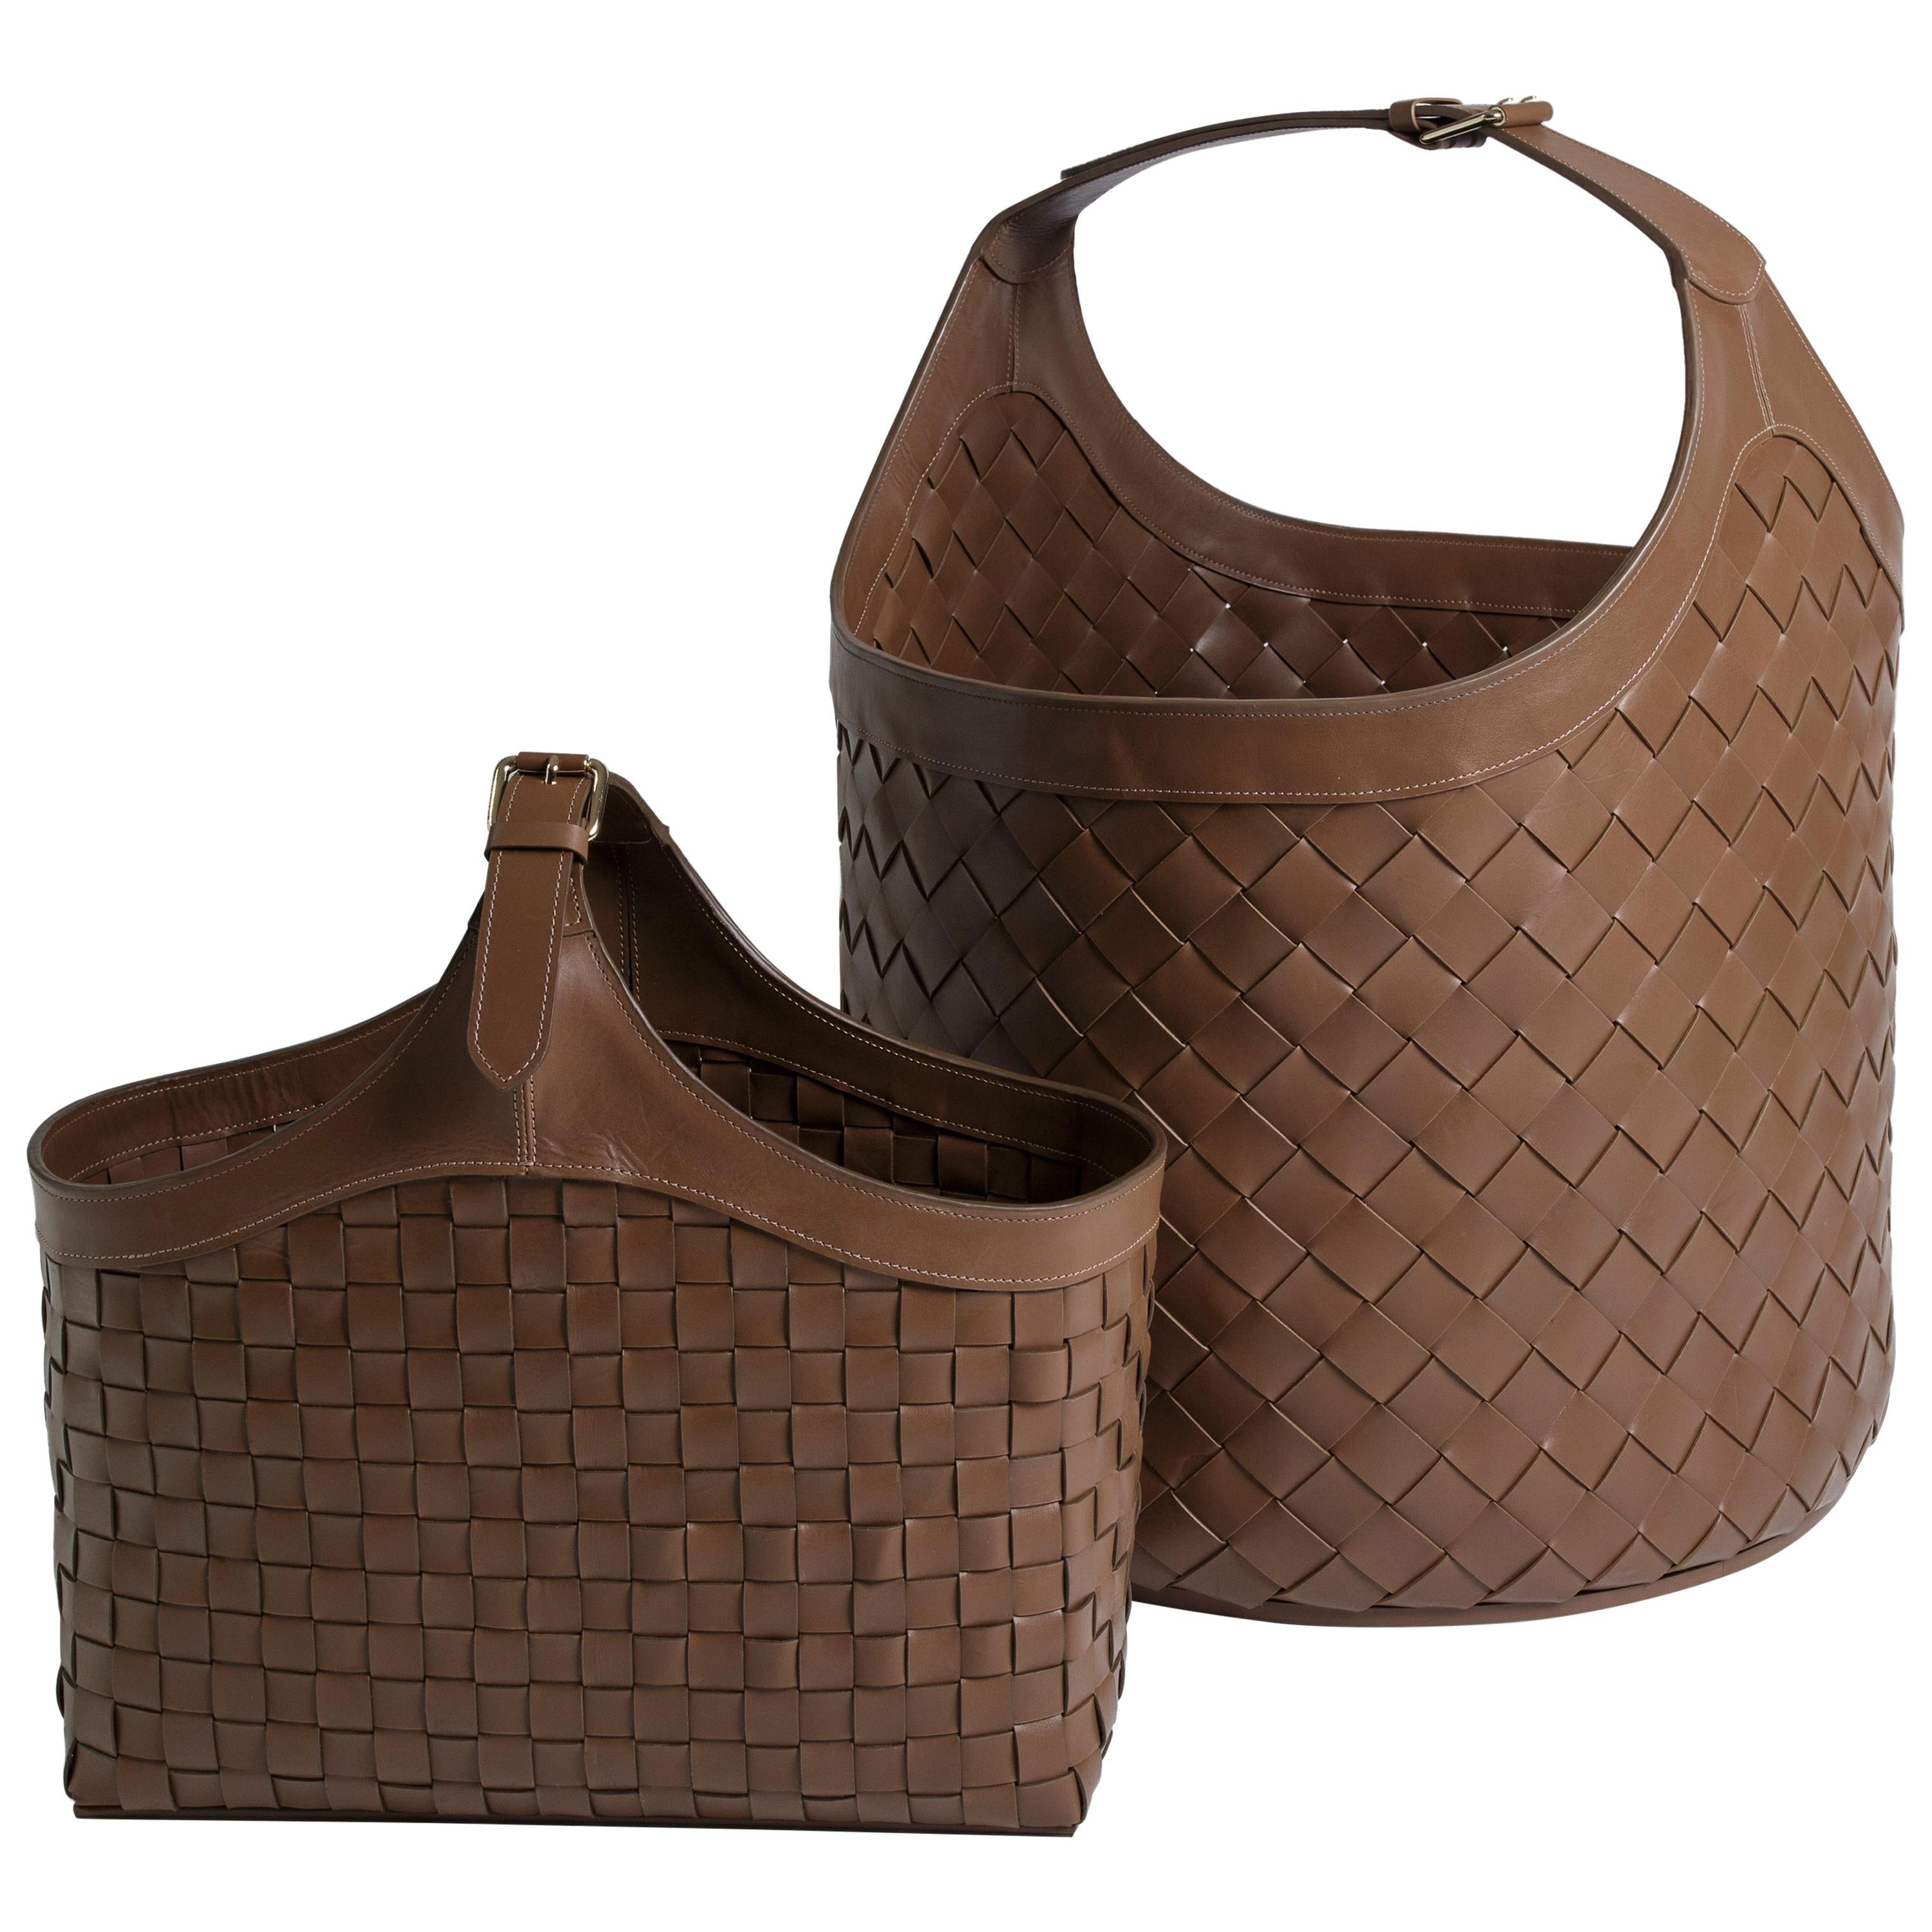 Brazilian Leather Baskets For Sale